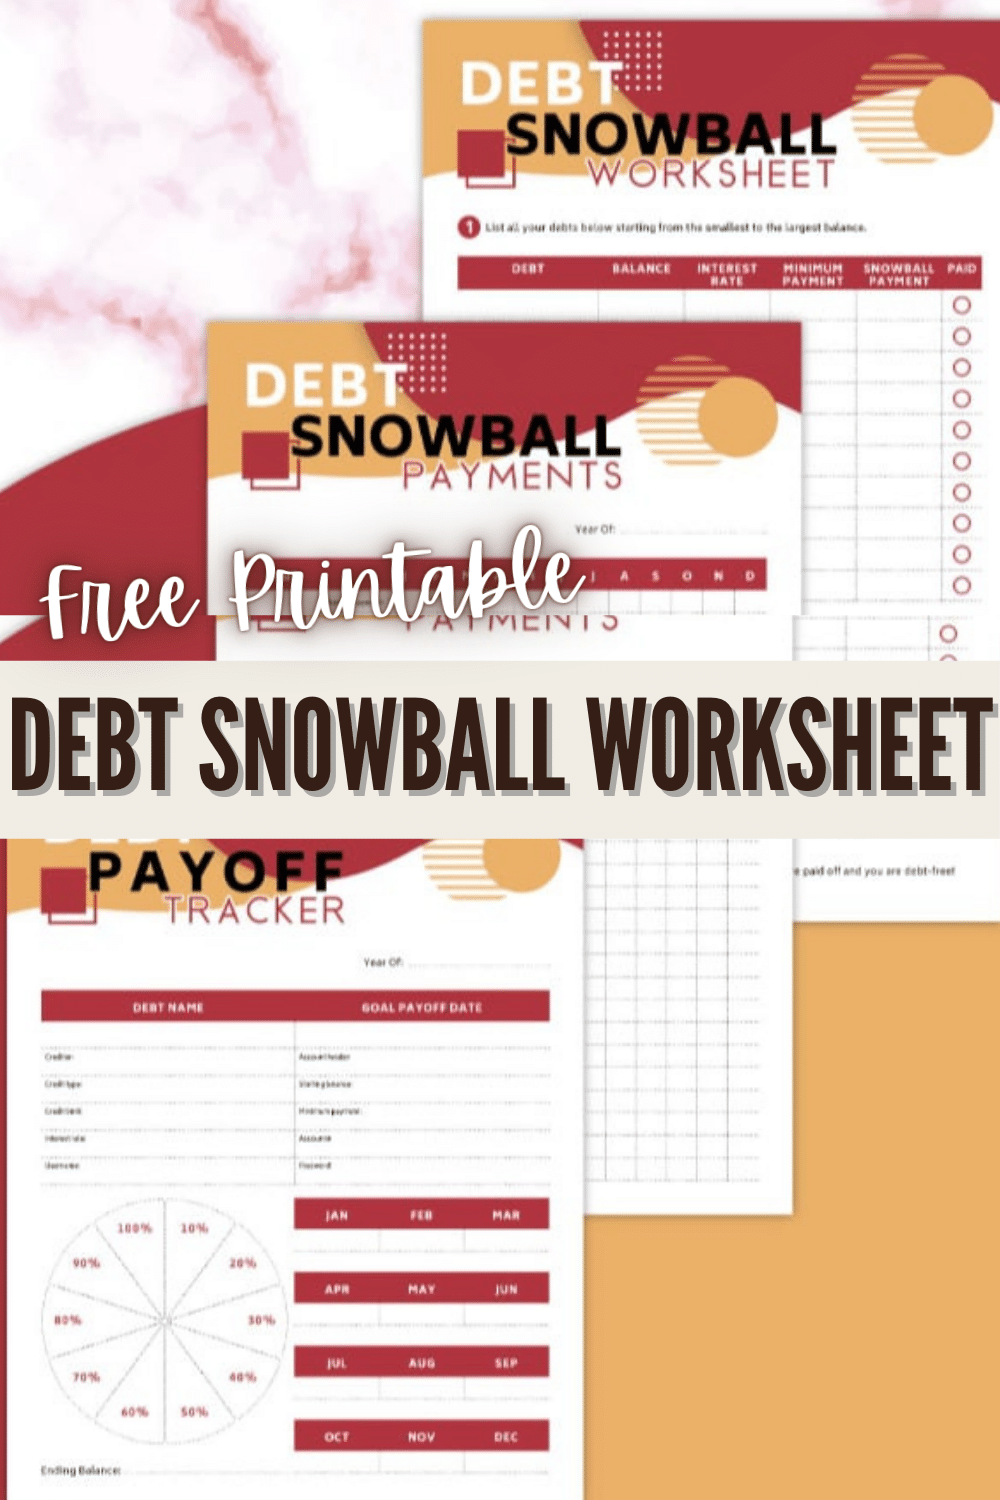 This free printable debt snowball worksheet will hep you stay focused on paying your debts off this year. A debt snowball worksheet set makes it easy. #moneytips #freeprintables #debtsnowball via @wondermomwannab